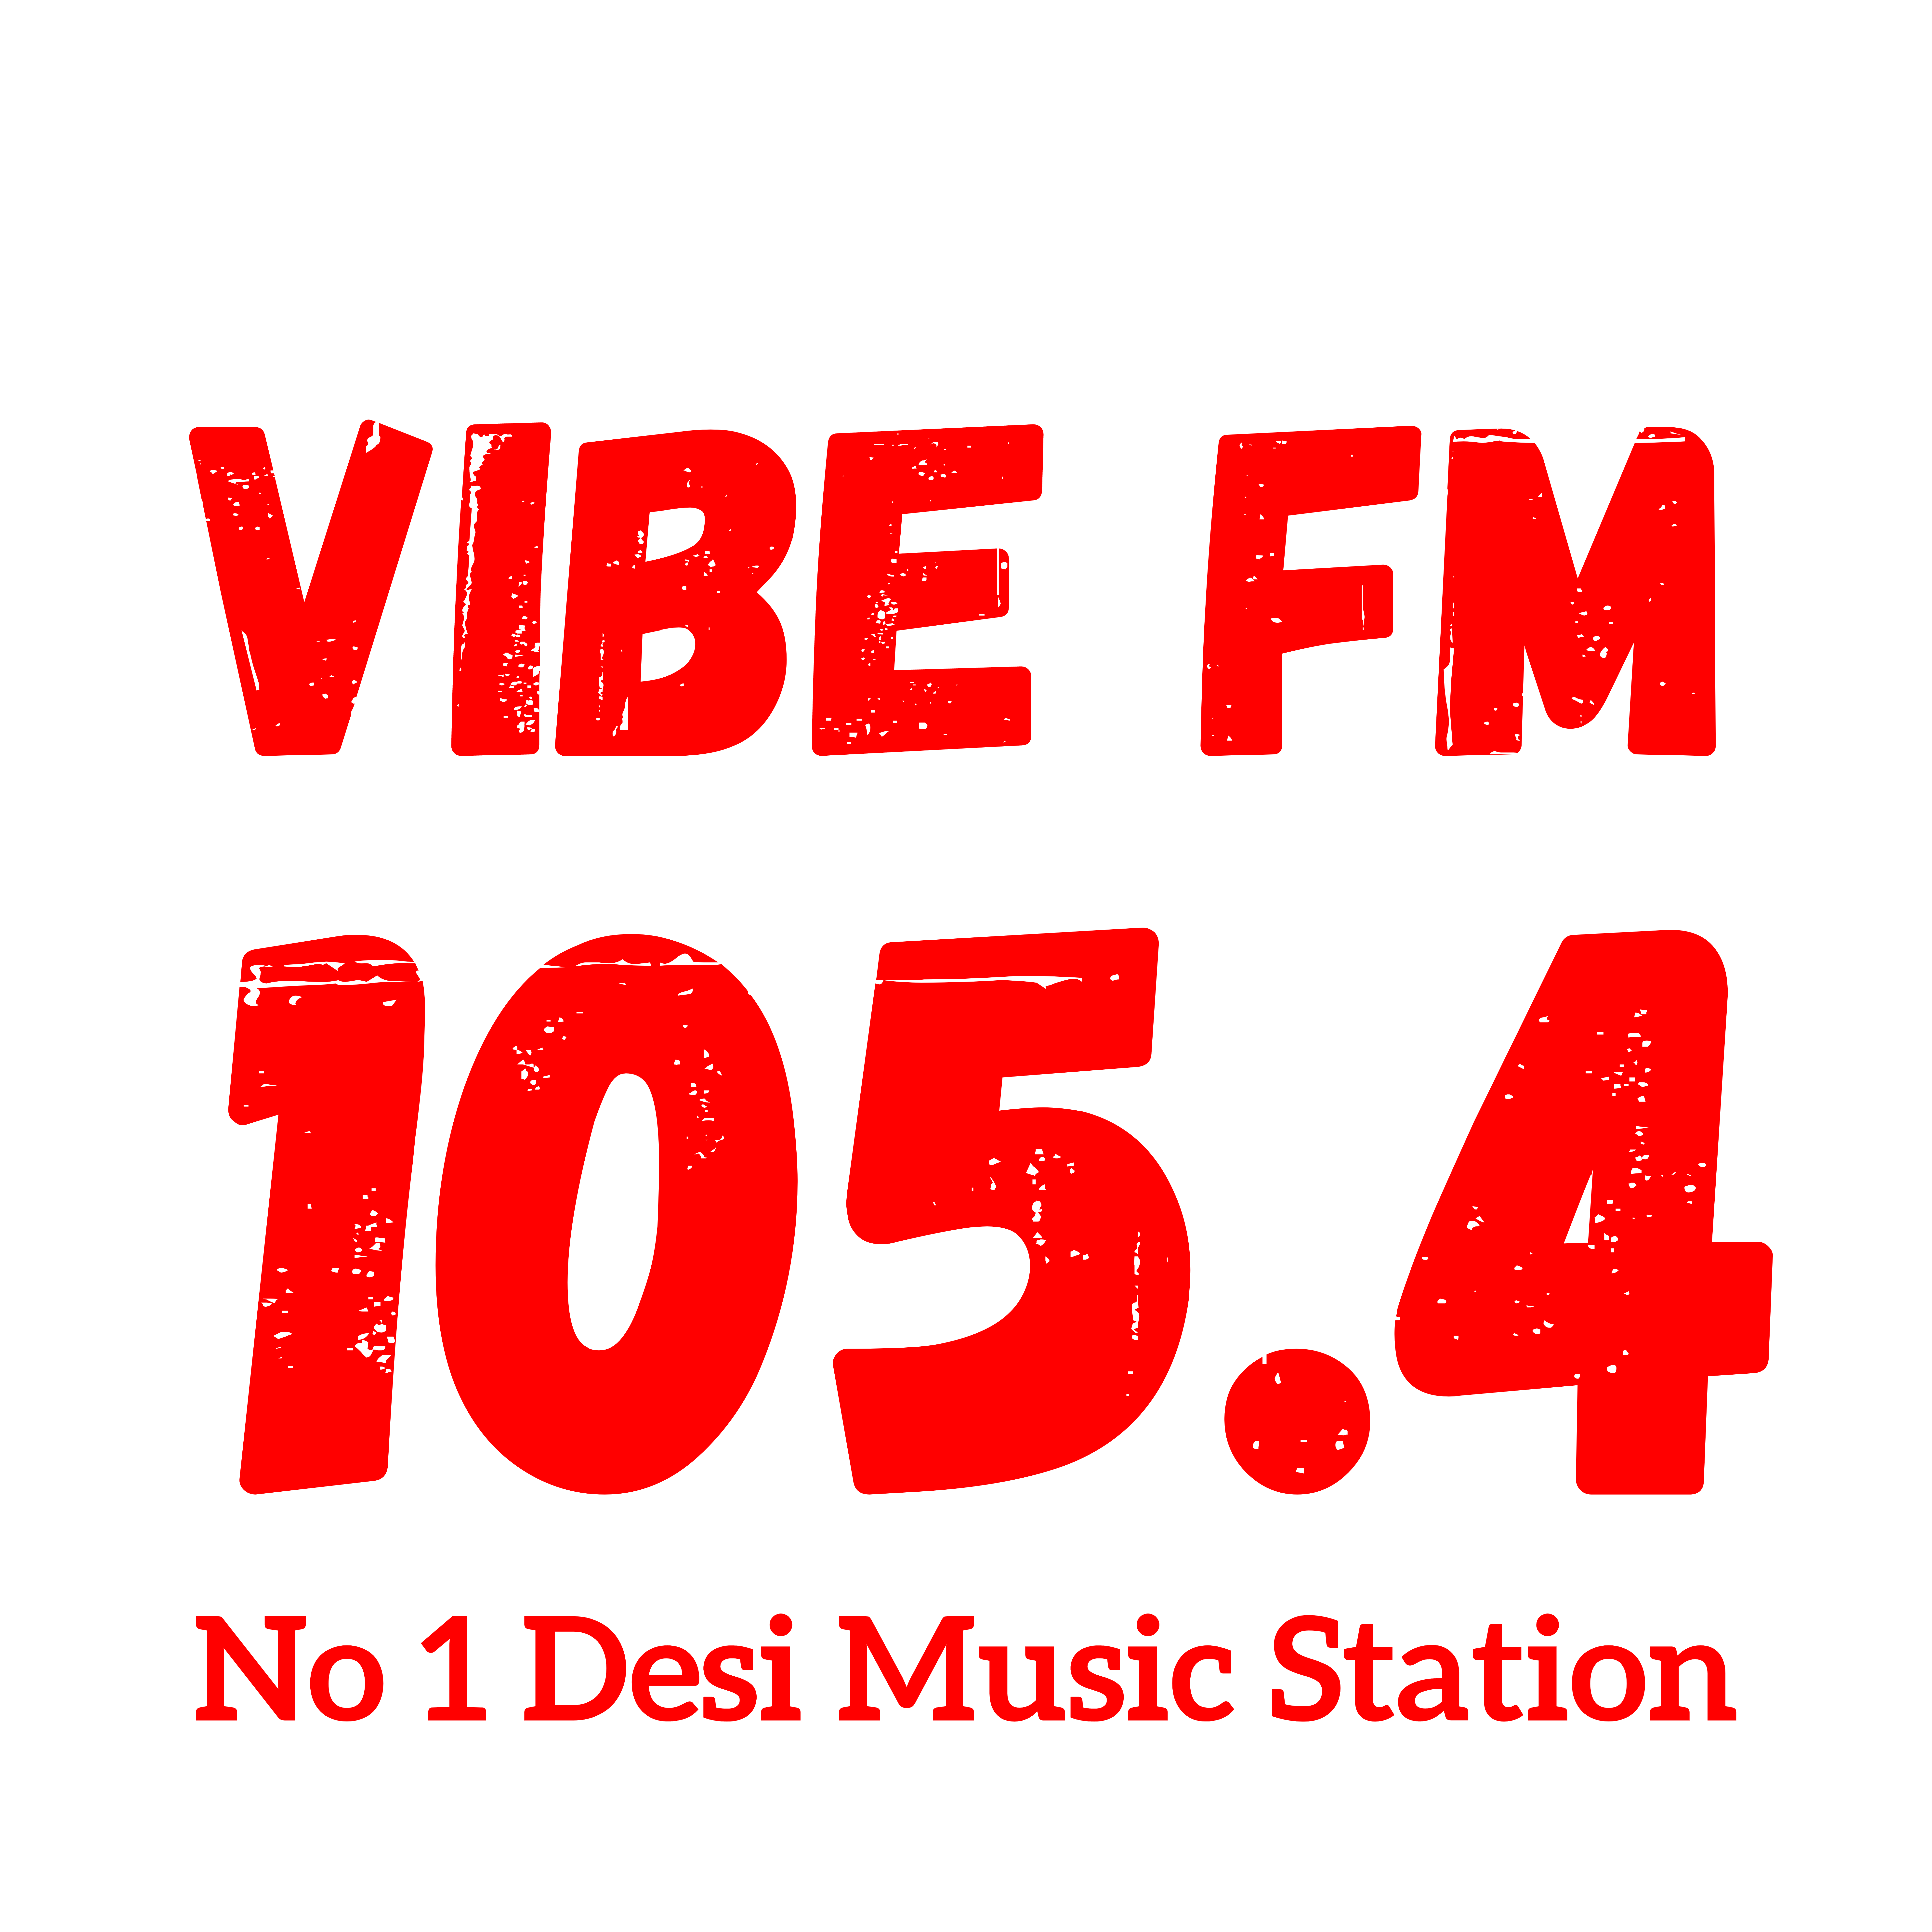 VIBE FM 105.4 – NO. 1 DESI MUSIC STATION IN UAE!!